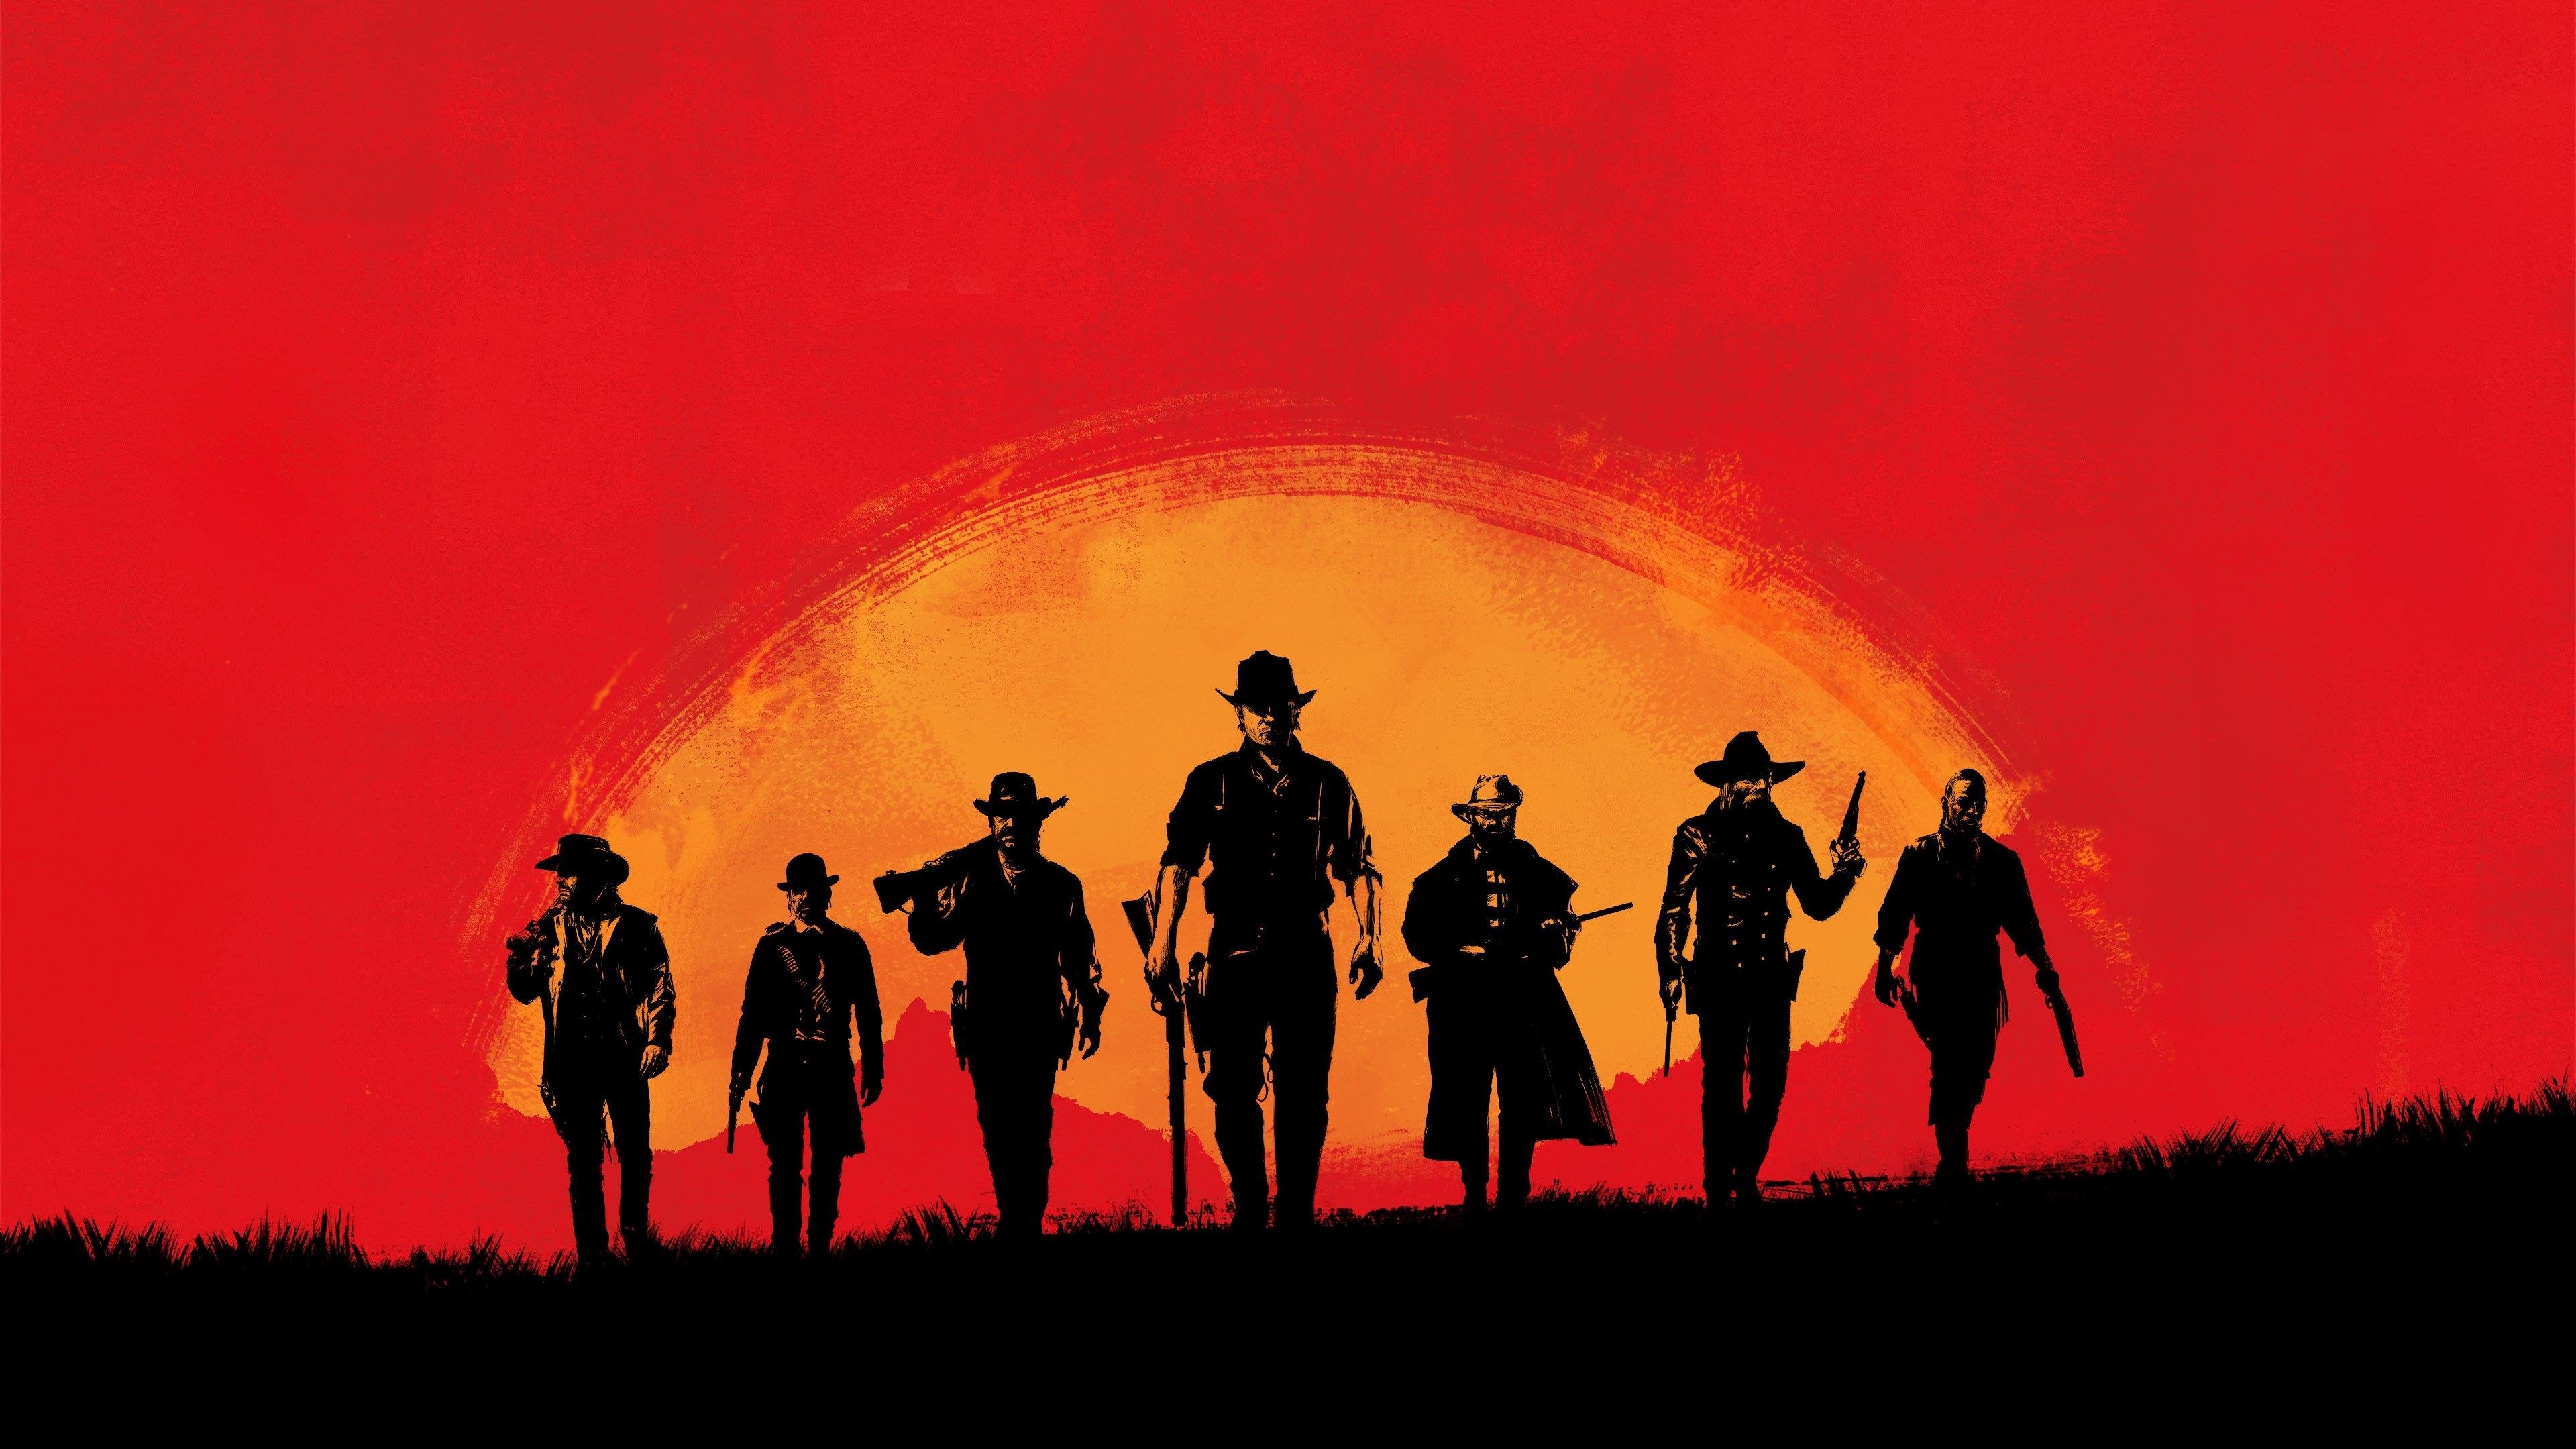 Звуки рдр 2. РДР 2. Red Dead Redemption 2 poster. Red Redemption 2. Red Dead Redemption 2 Постер.